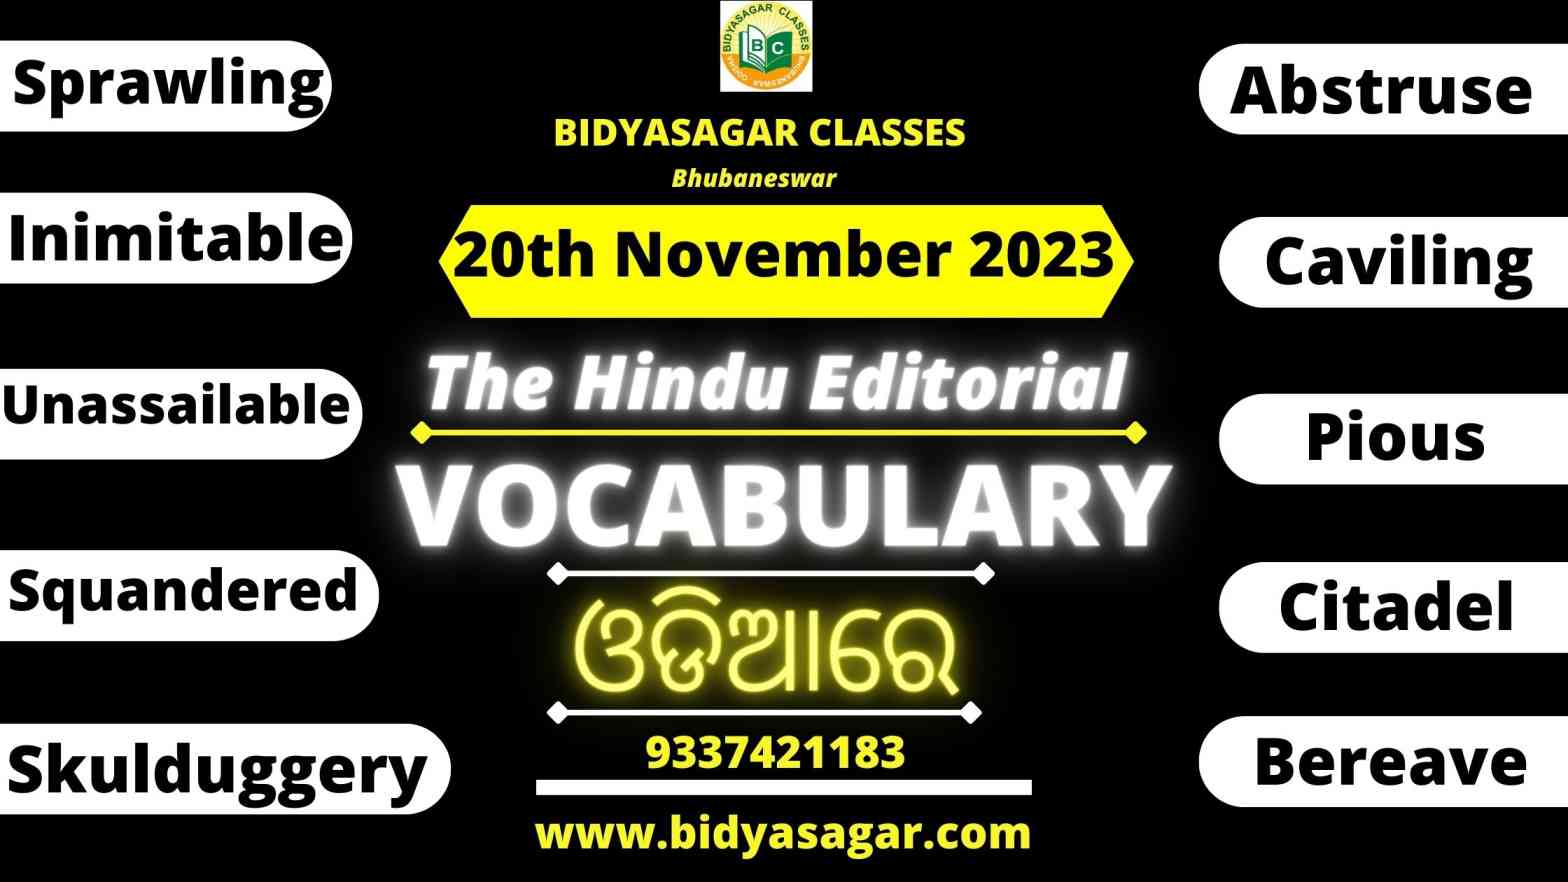 The Hindu Editorial Vocabulary of 20th November 2023